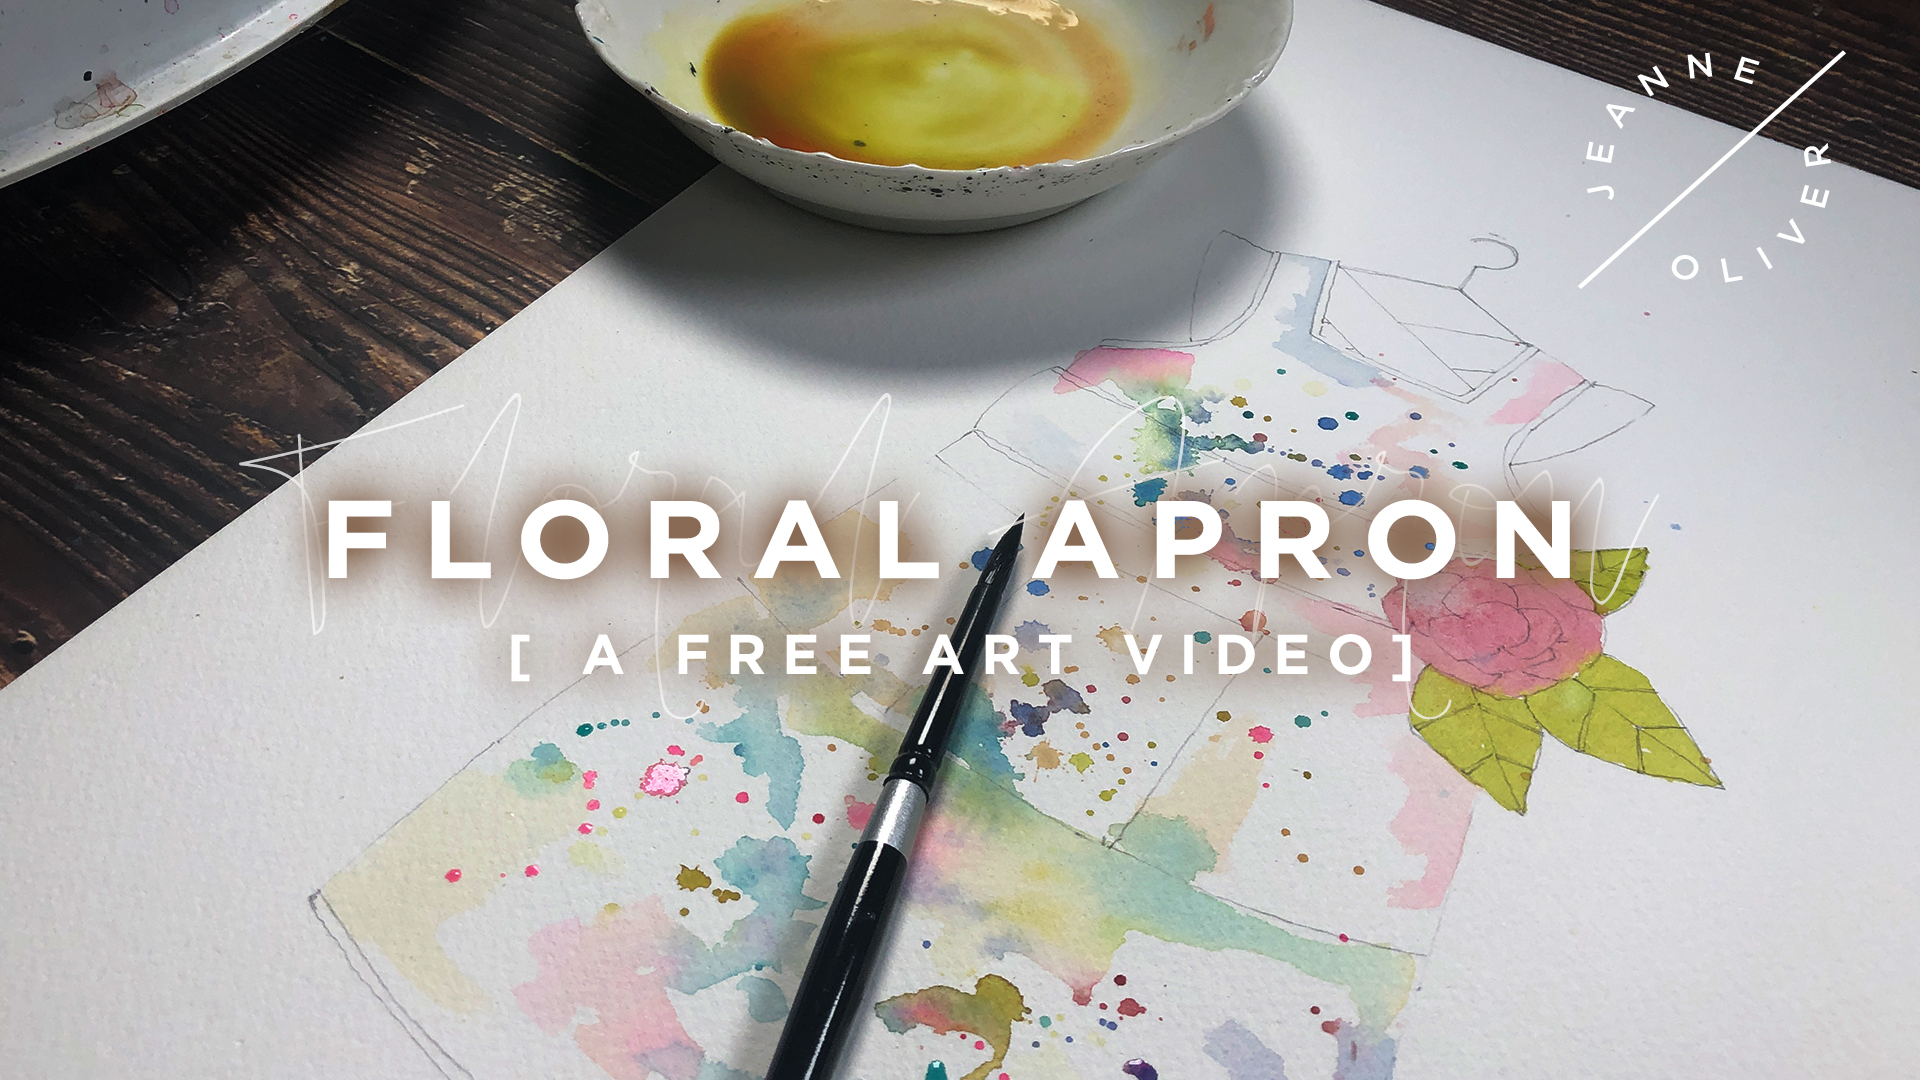 Free Art Video | Floral Apron with Danielle Donaldson